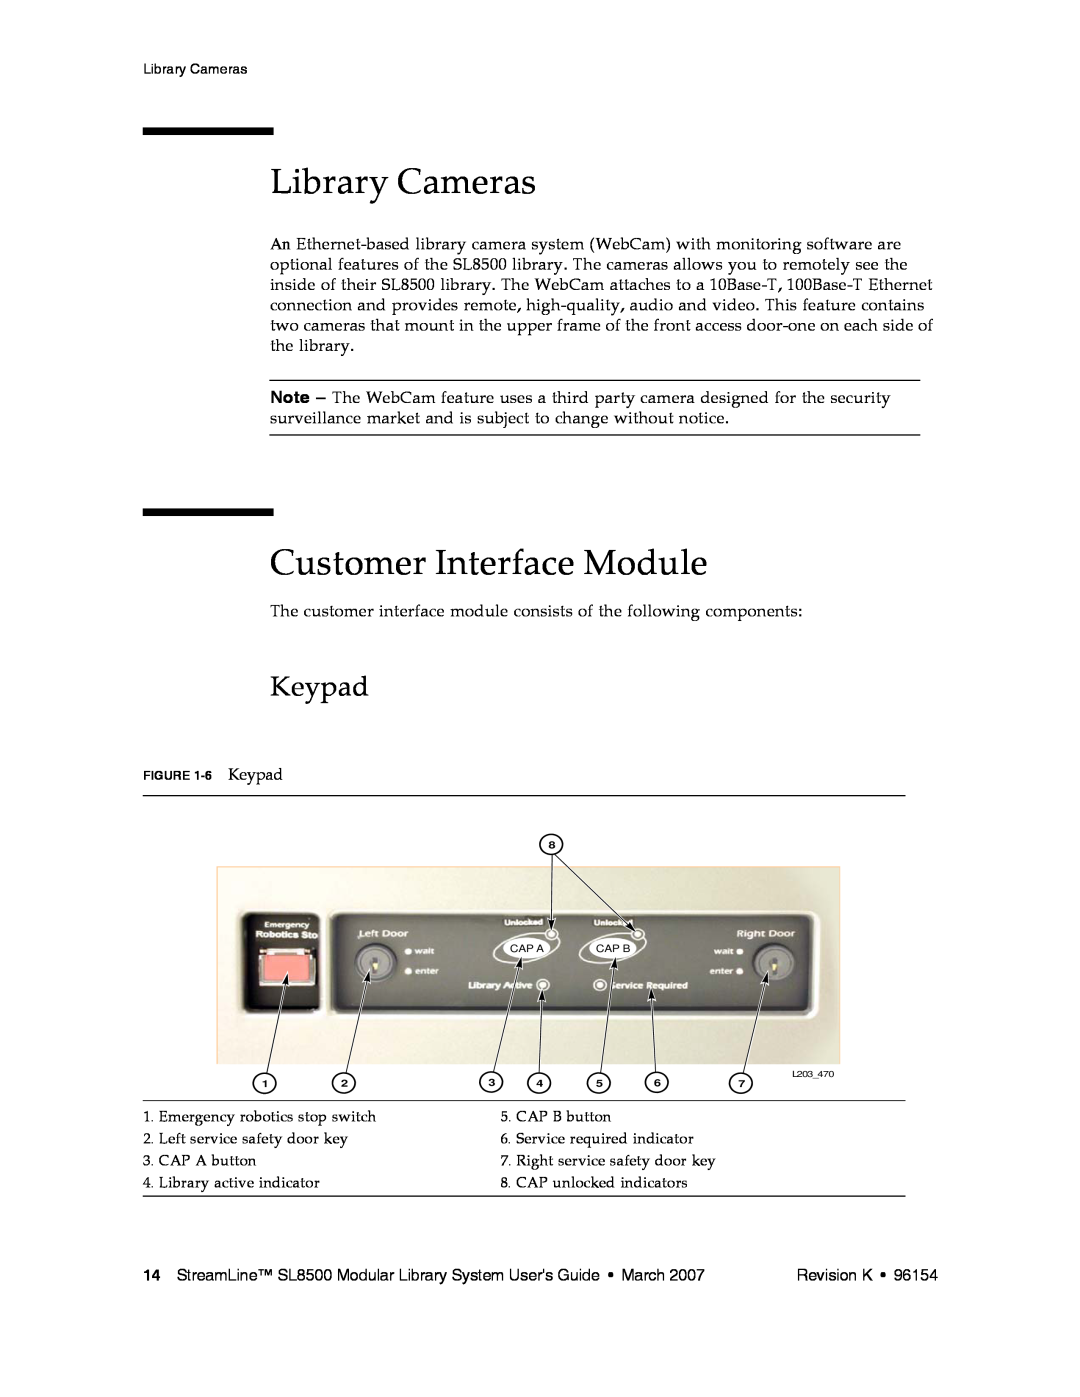 Sun Microsystems SL8500 manual Library Cameras, Customer Interface Module, Keypad 